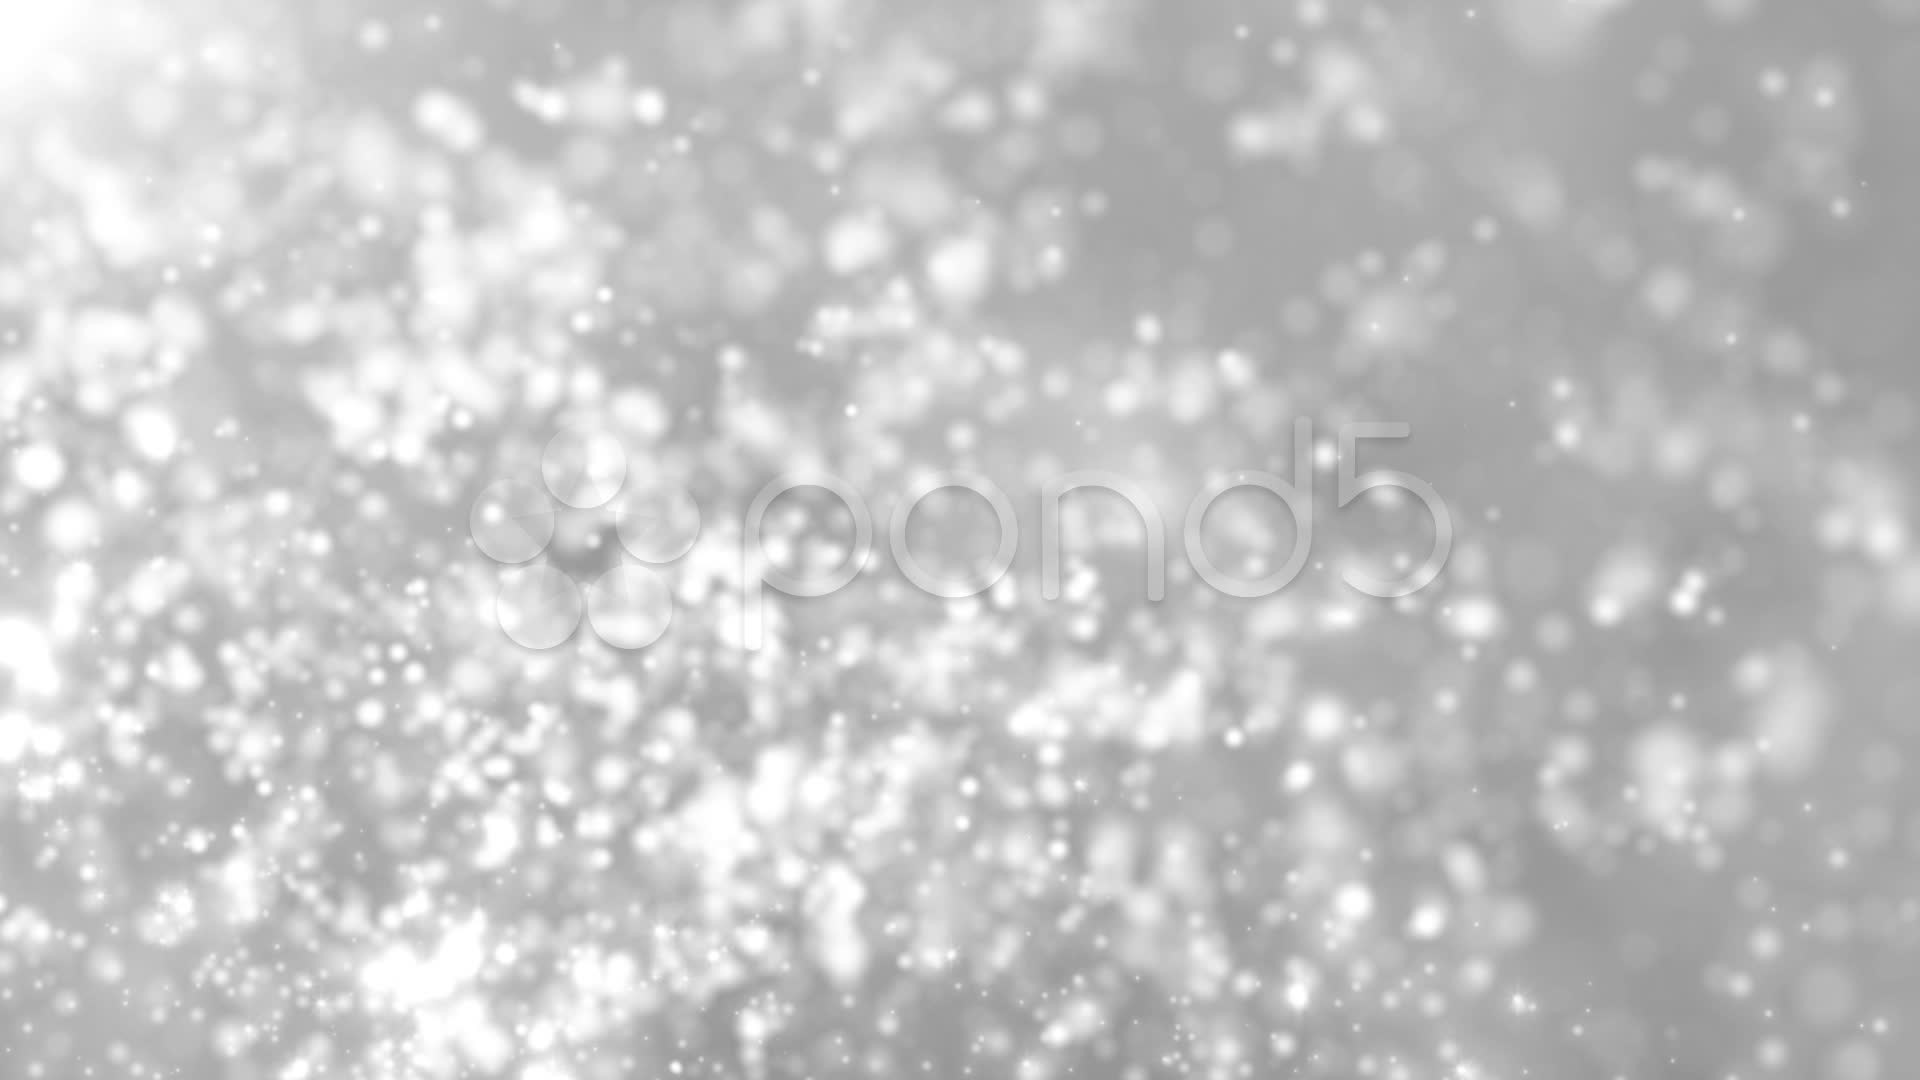 1920x1080 Silver Glitter Winter Christmas Background Stock Video 10853008 | HD .